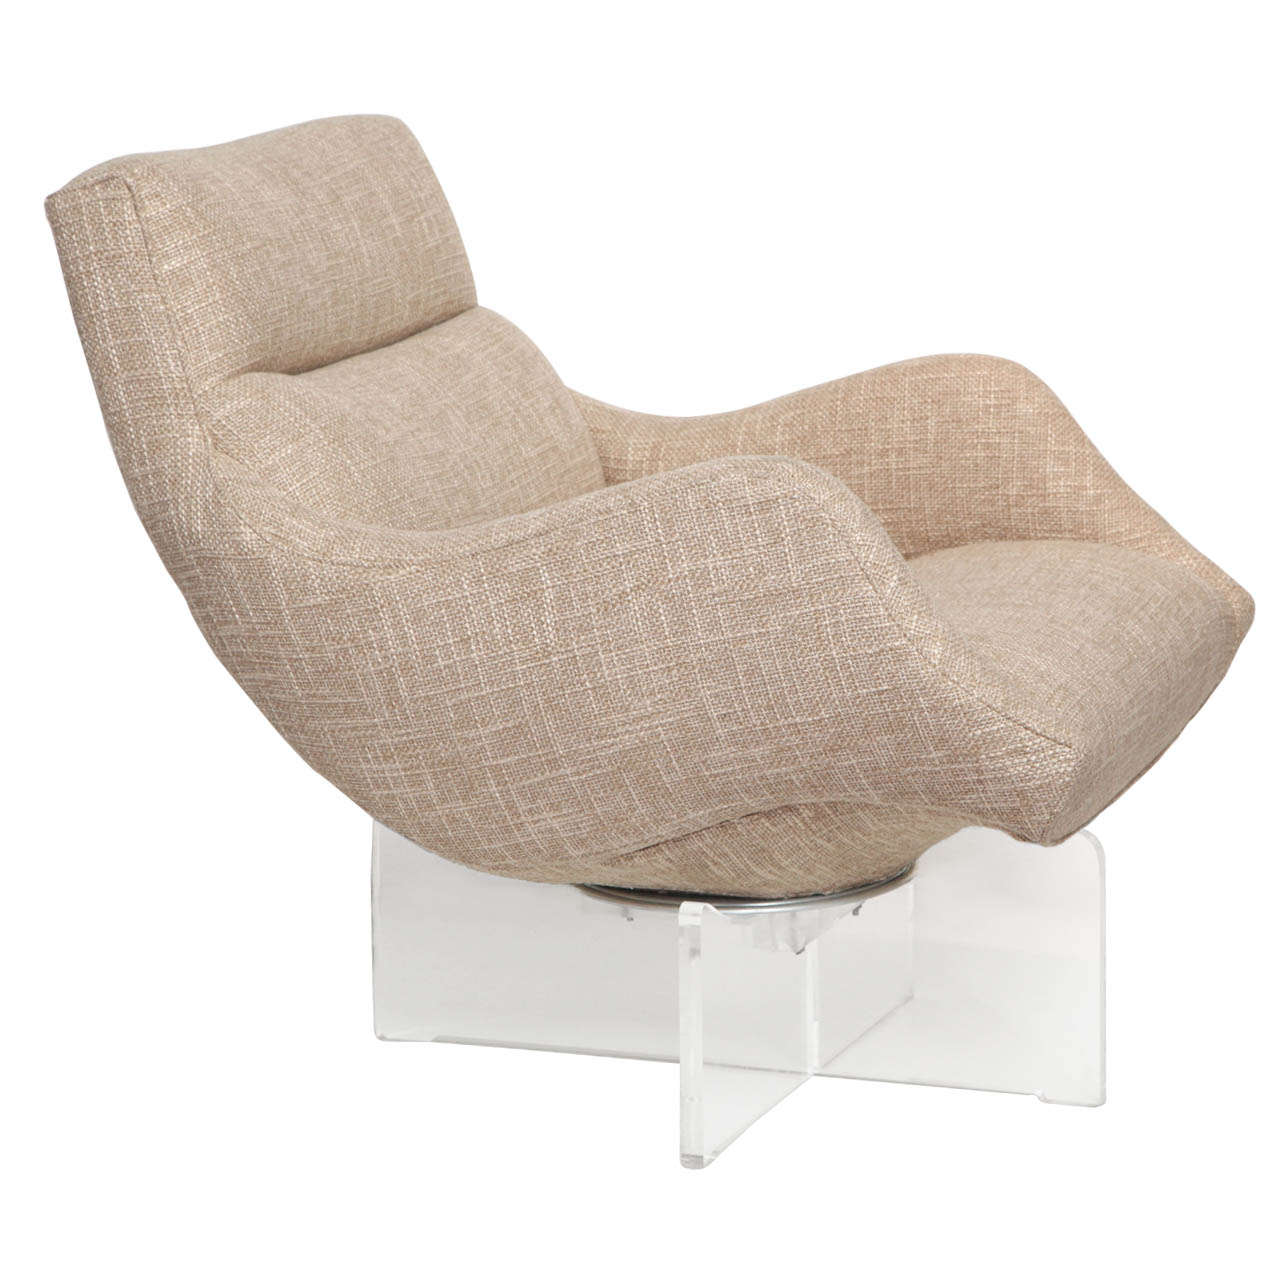 Rare "Cosmos" Lounge Chair by Vladimir Kagan